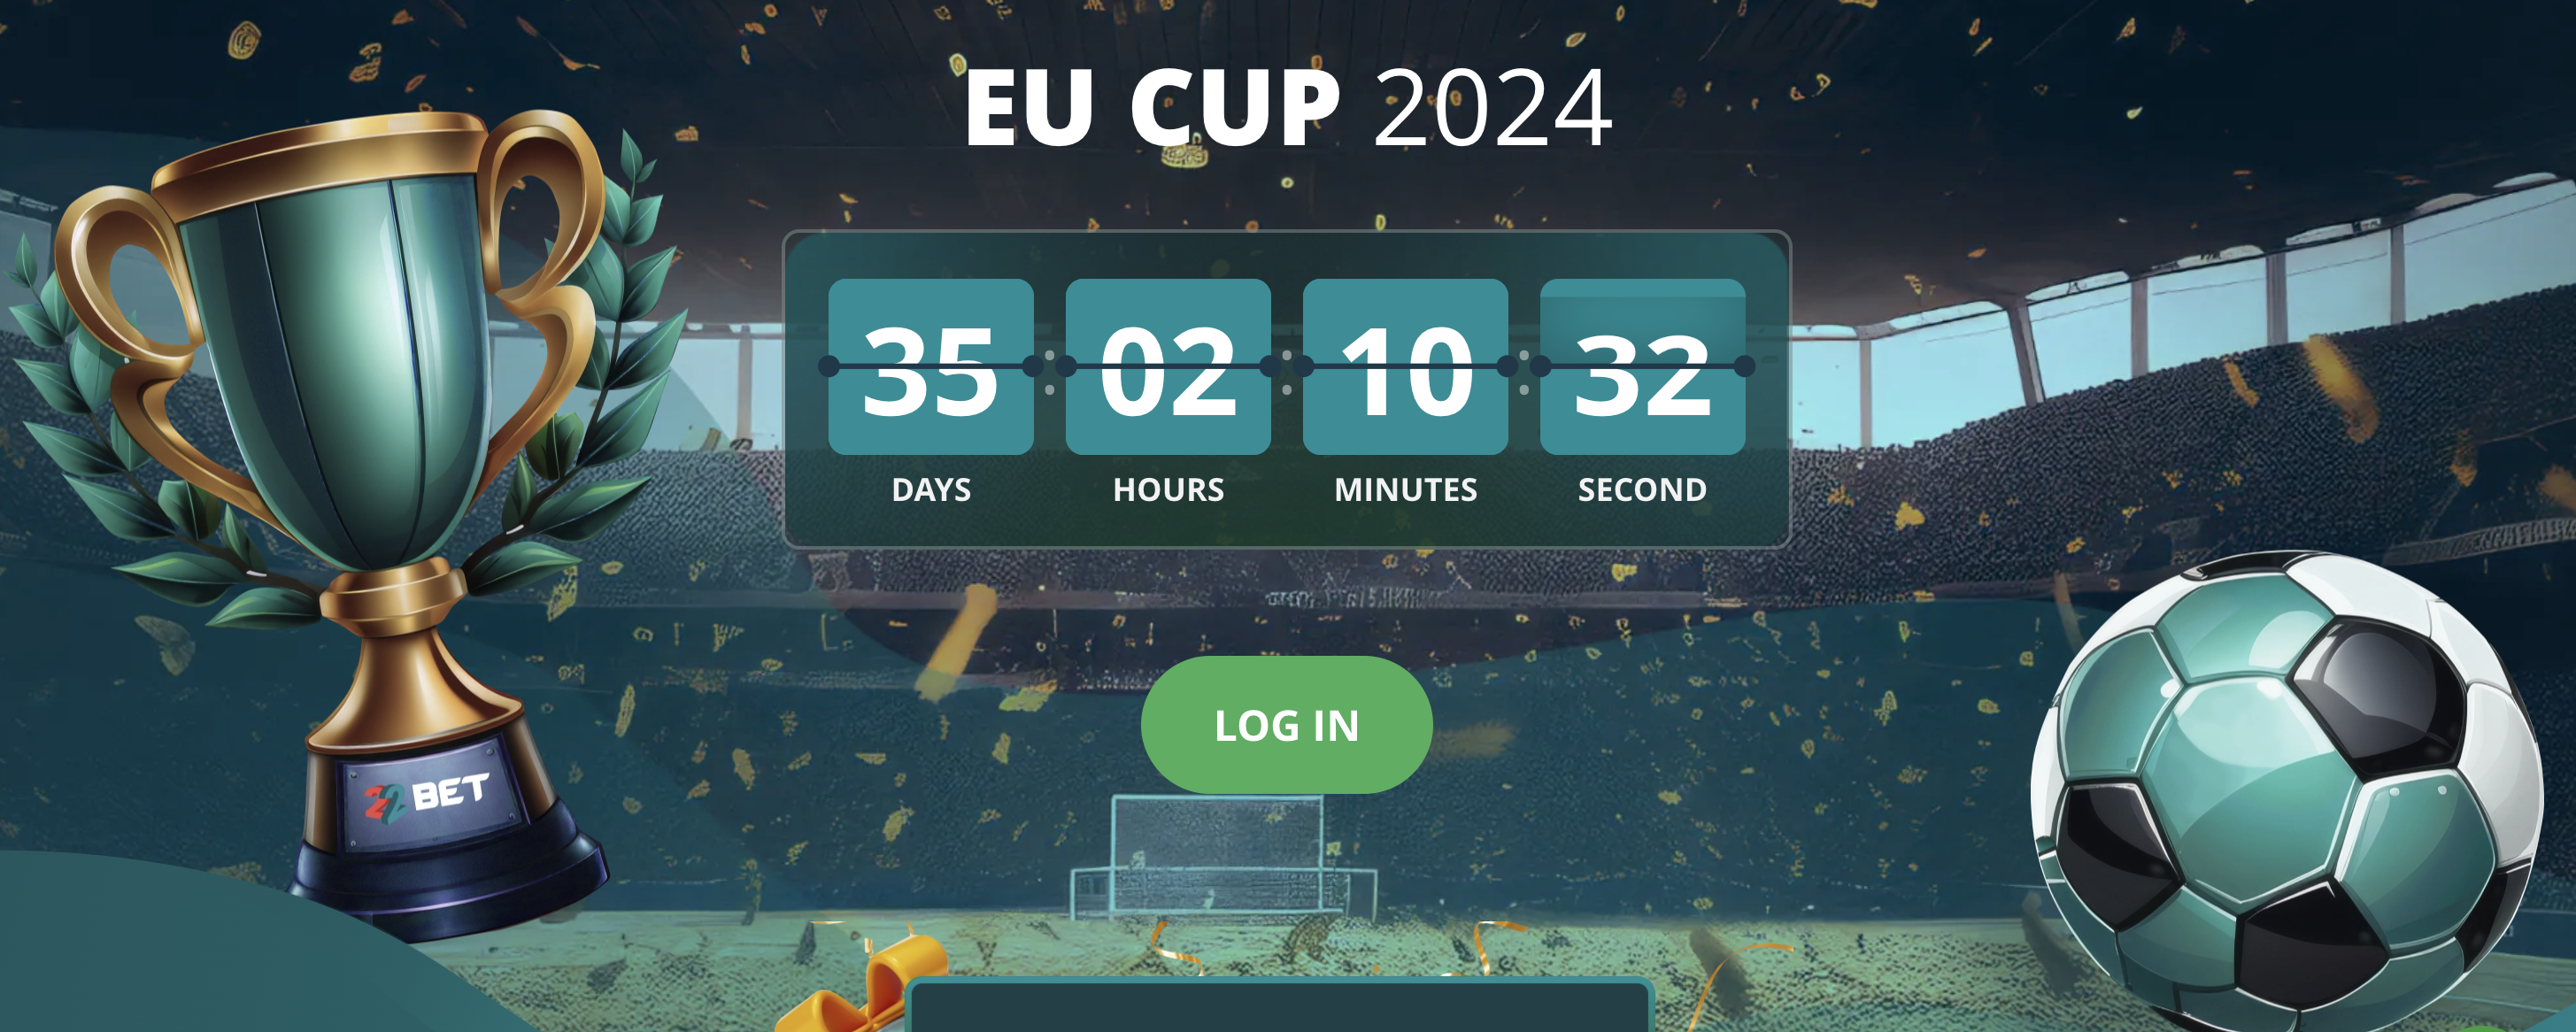 EURO 2024: 22Bet EU Cup 2024 Race up to 150,000 EUR